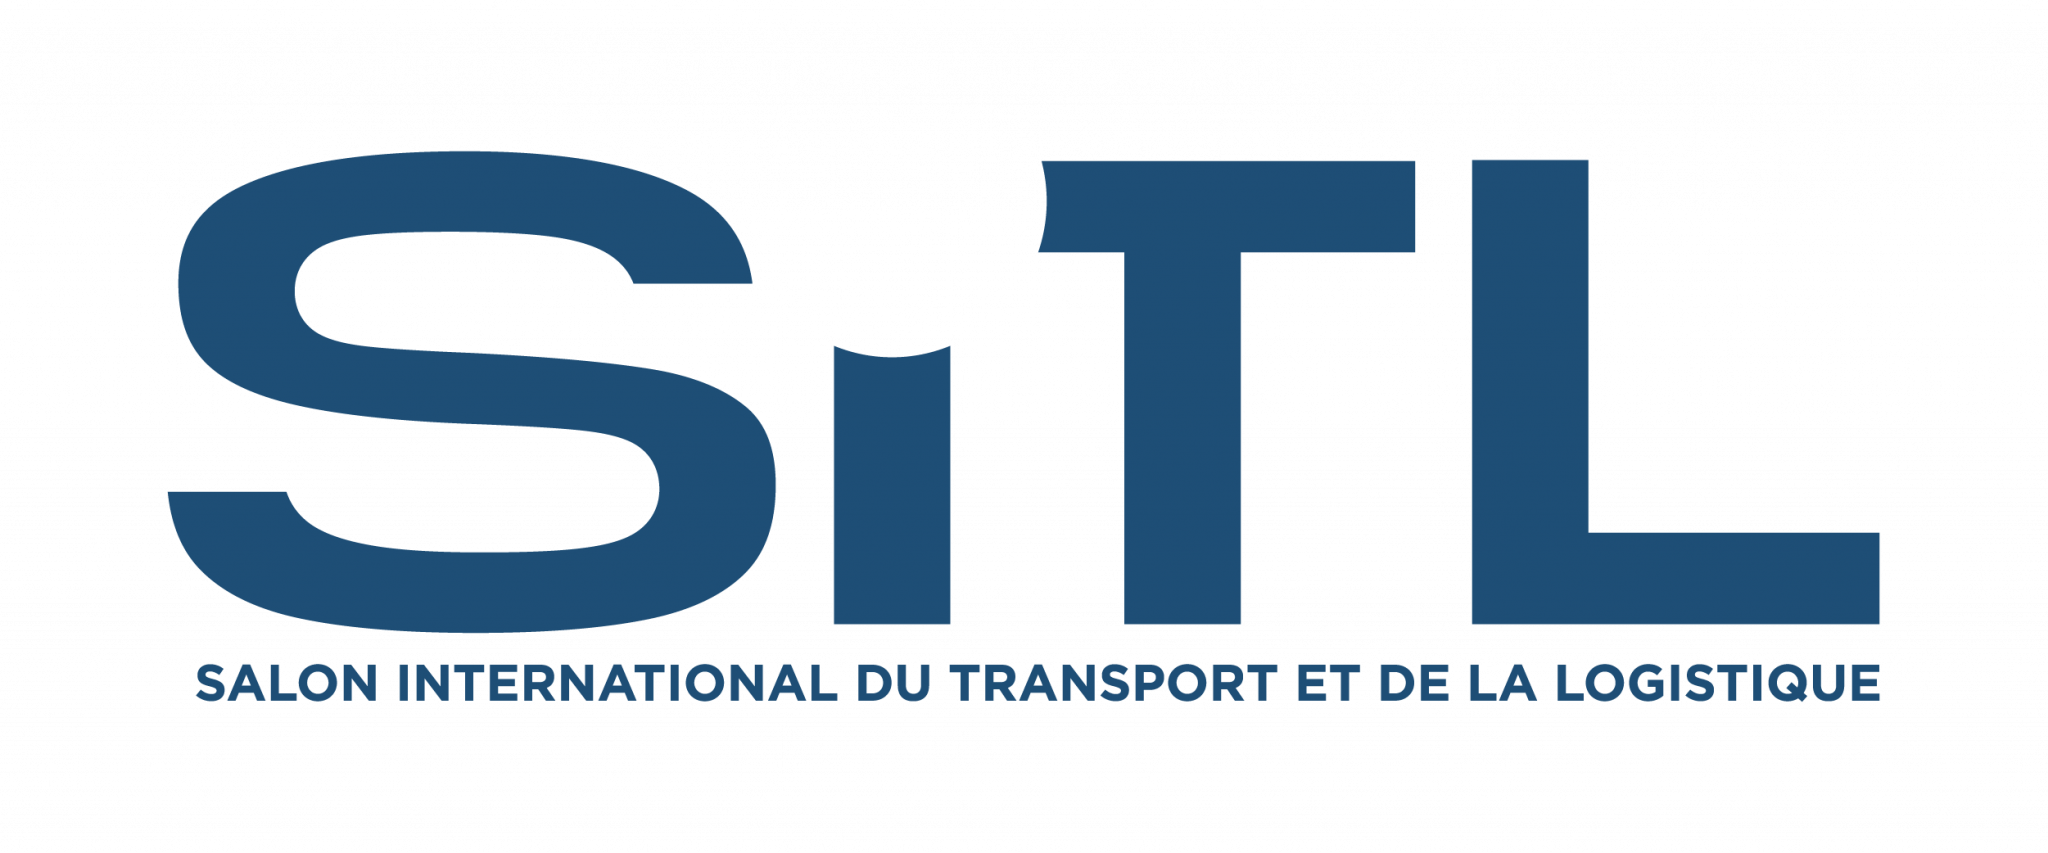 Logo SITL final FR sans date